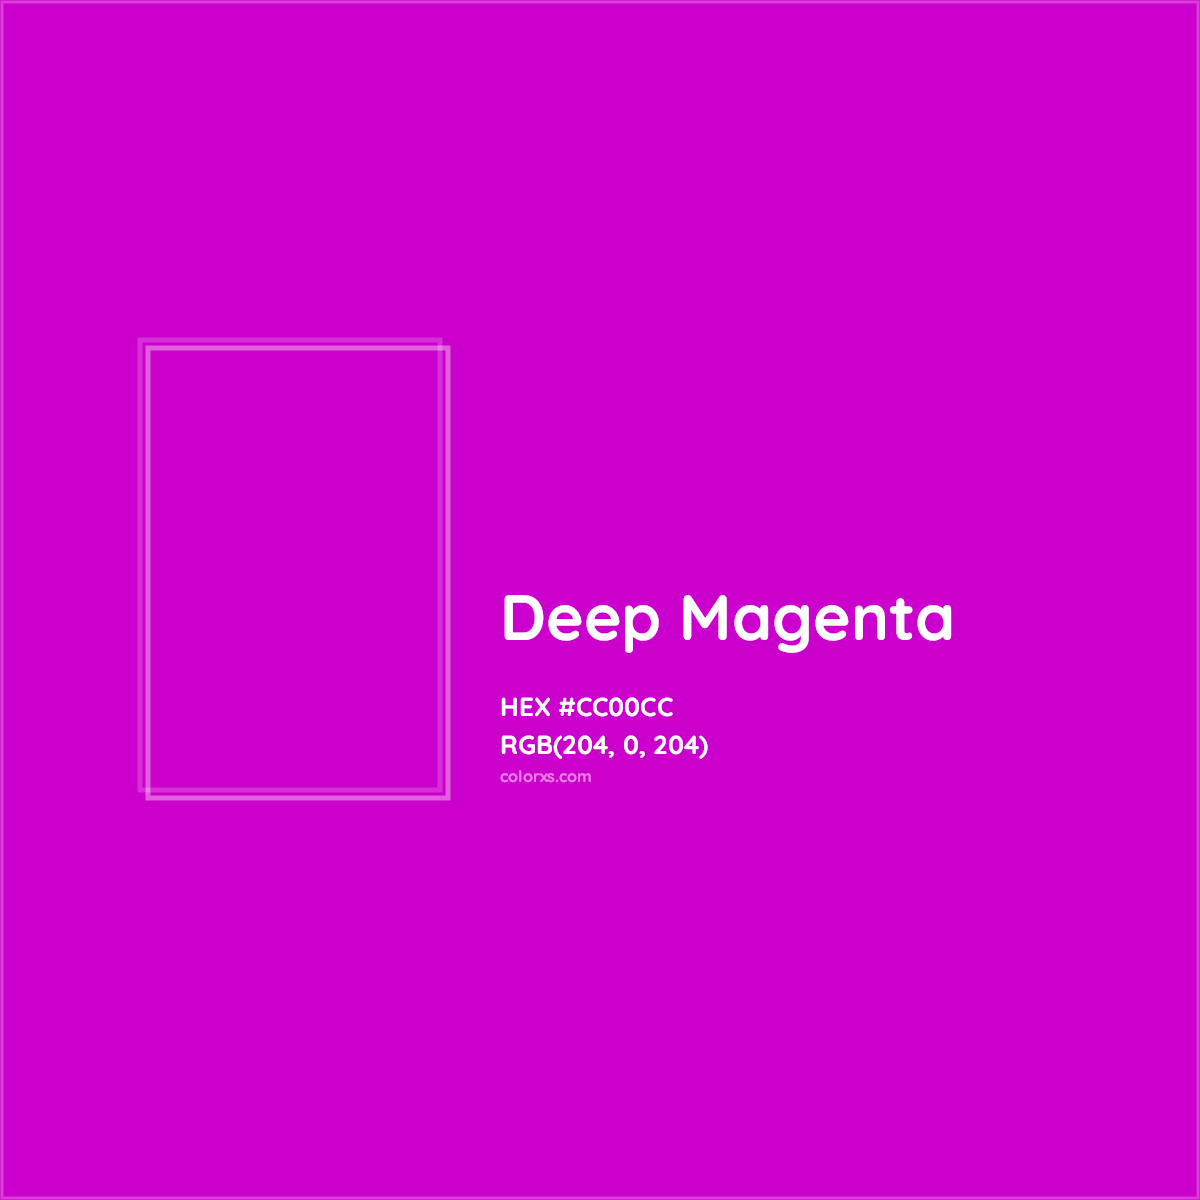 HEX #CC00CC Deep Magenta Color - Color Code